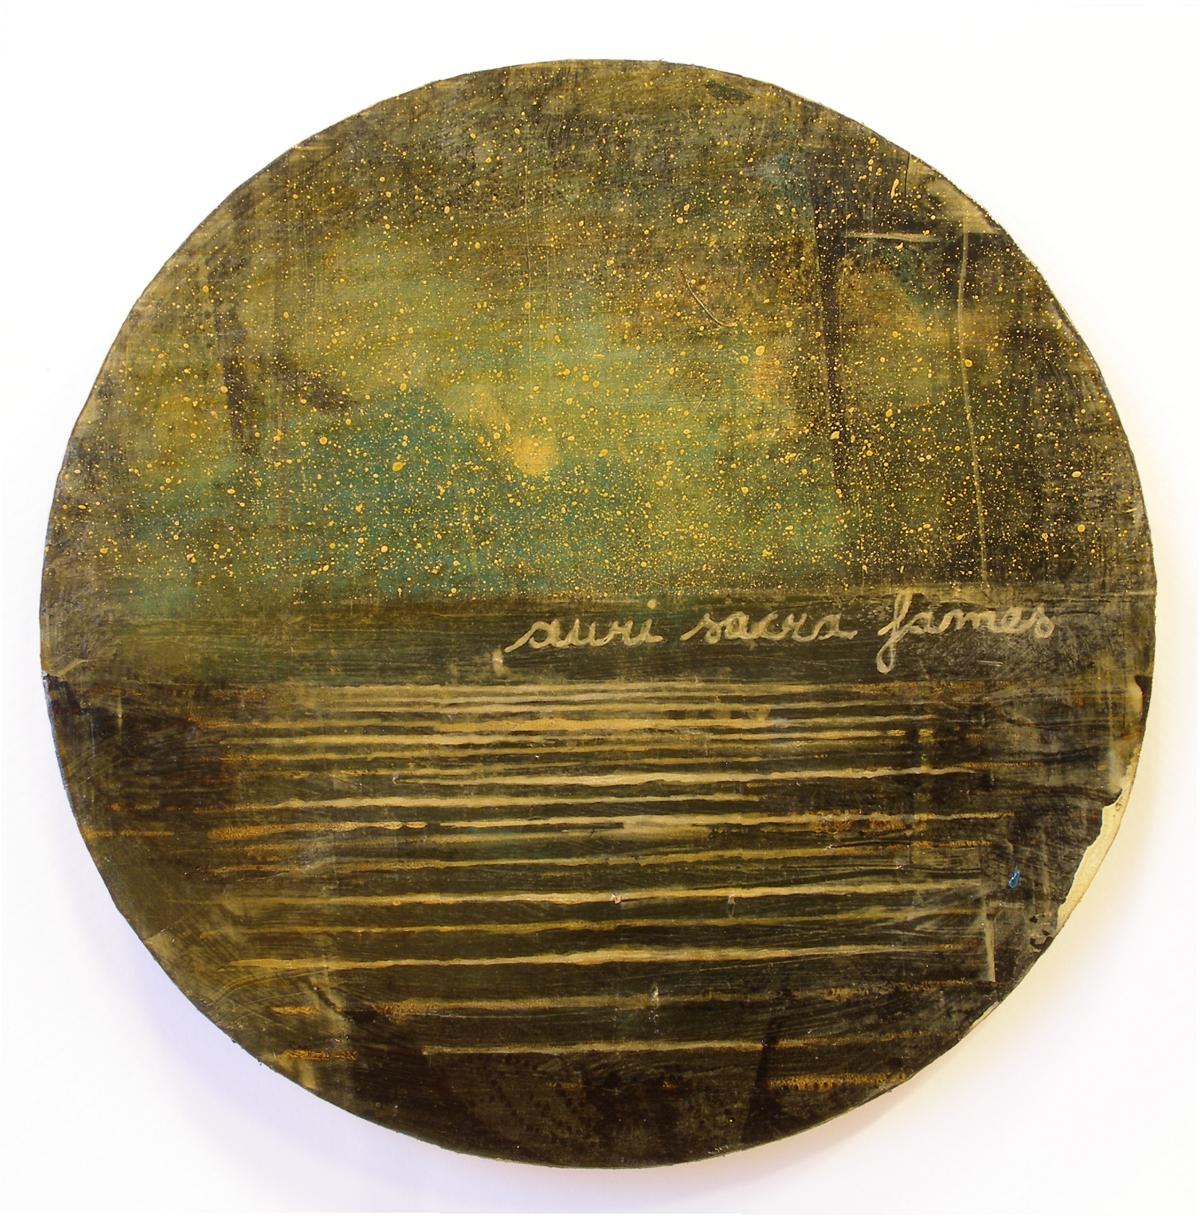 Jernej Forbici, Auri sacra fames VI, diametro 20 cm, 2017. acrilico e olio su carta